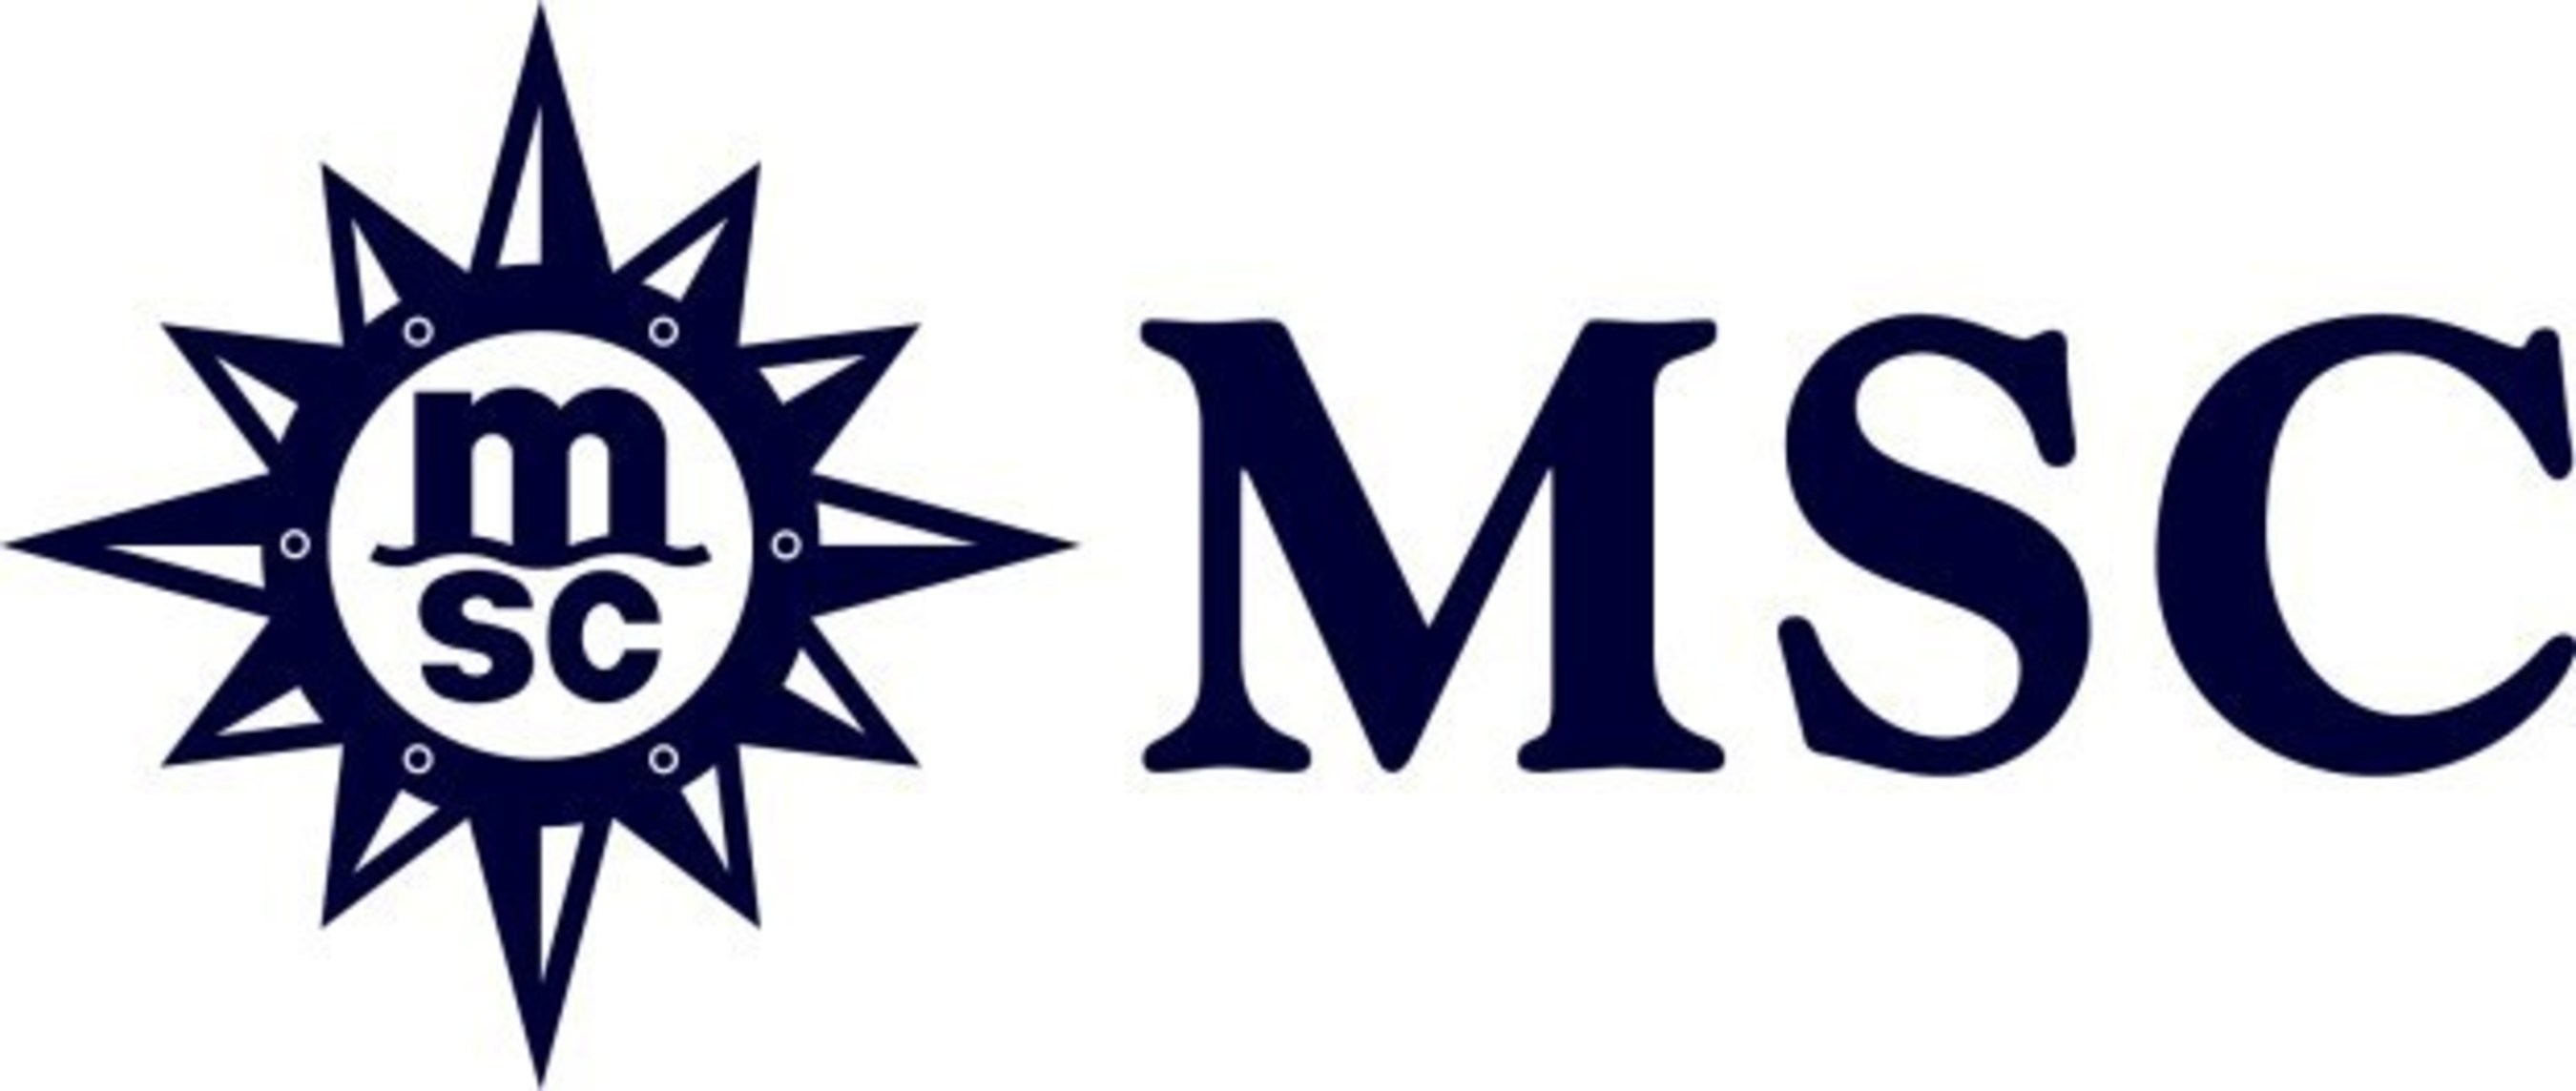 MSC Cruises USA Logo